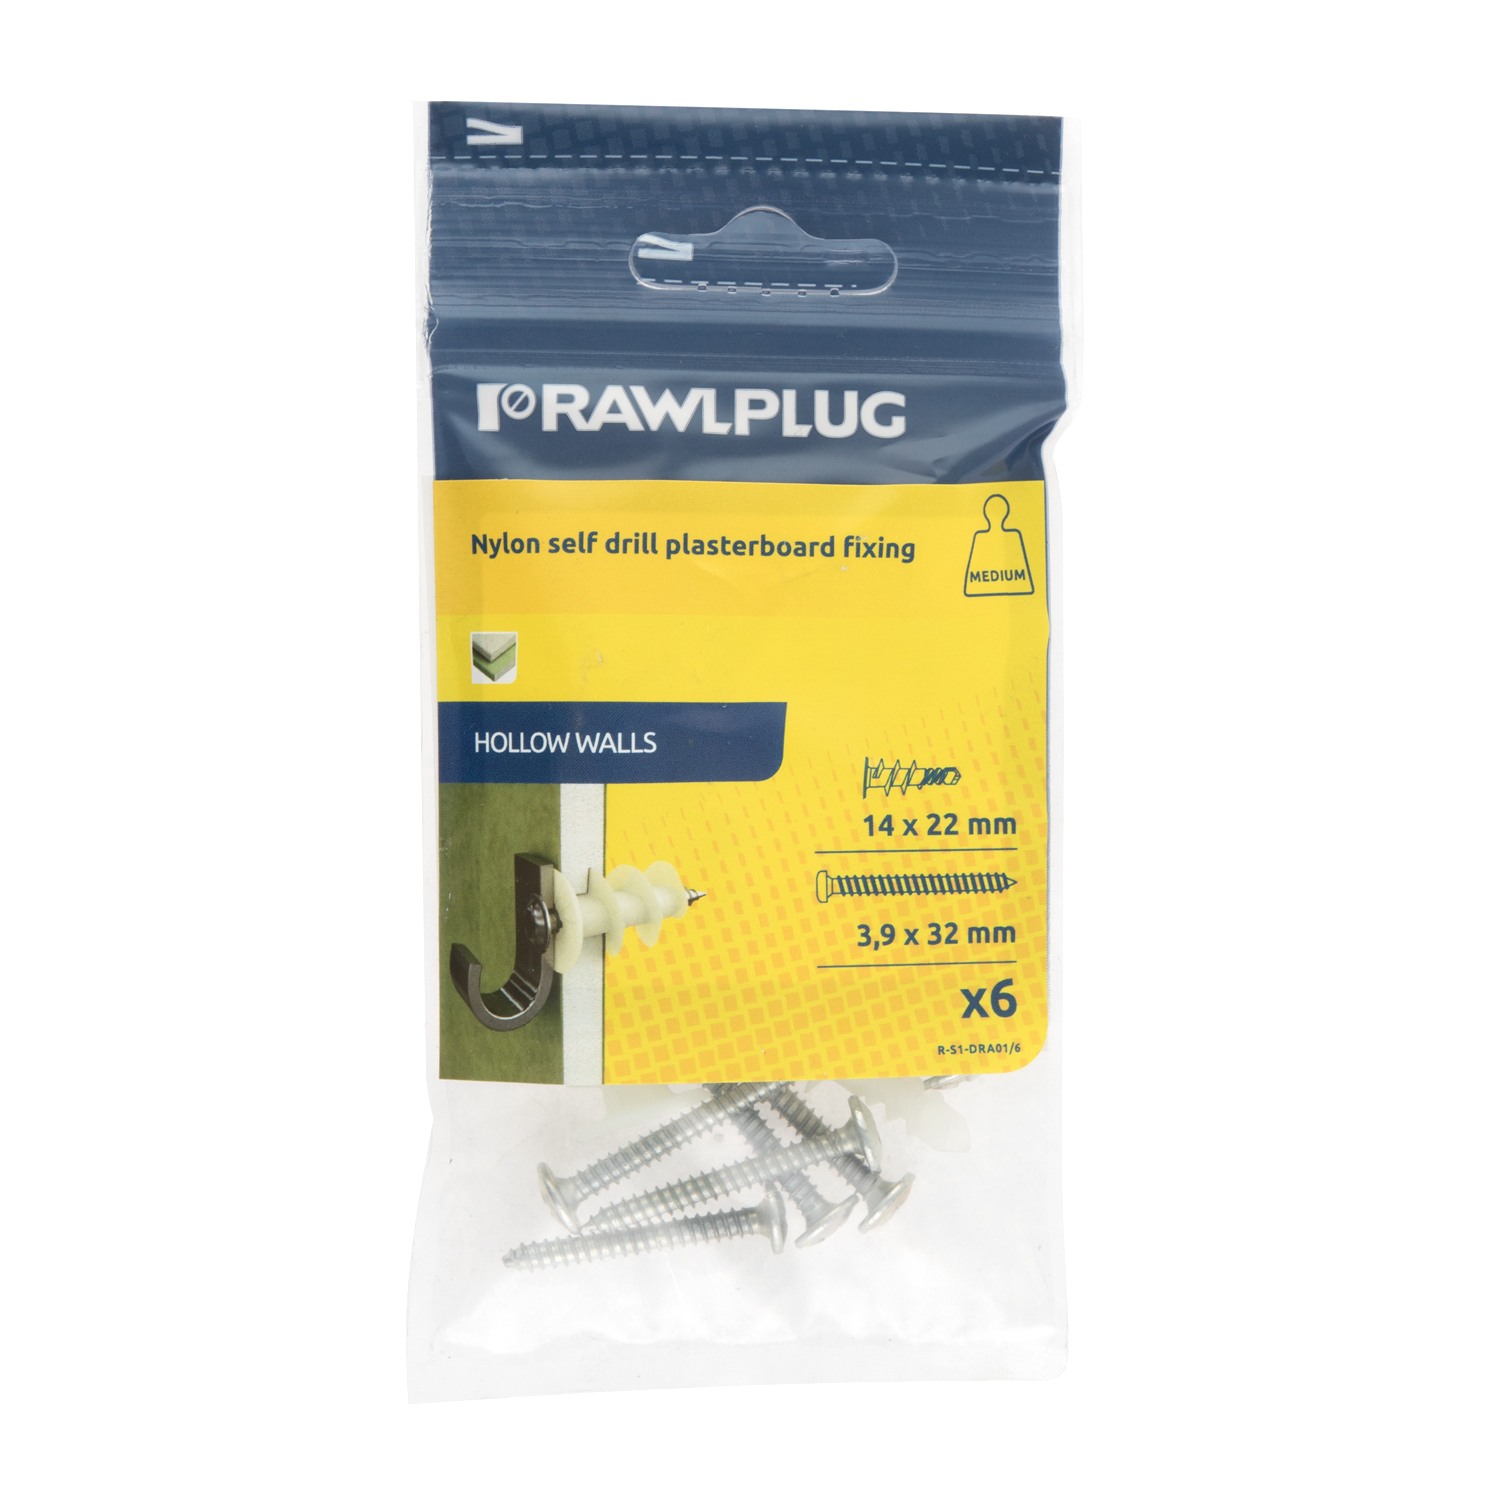 Rawlplug 14 x 22mm Nylon Self Drive Plasterboard Fixings 6 Pack Image